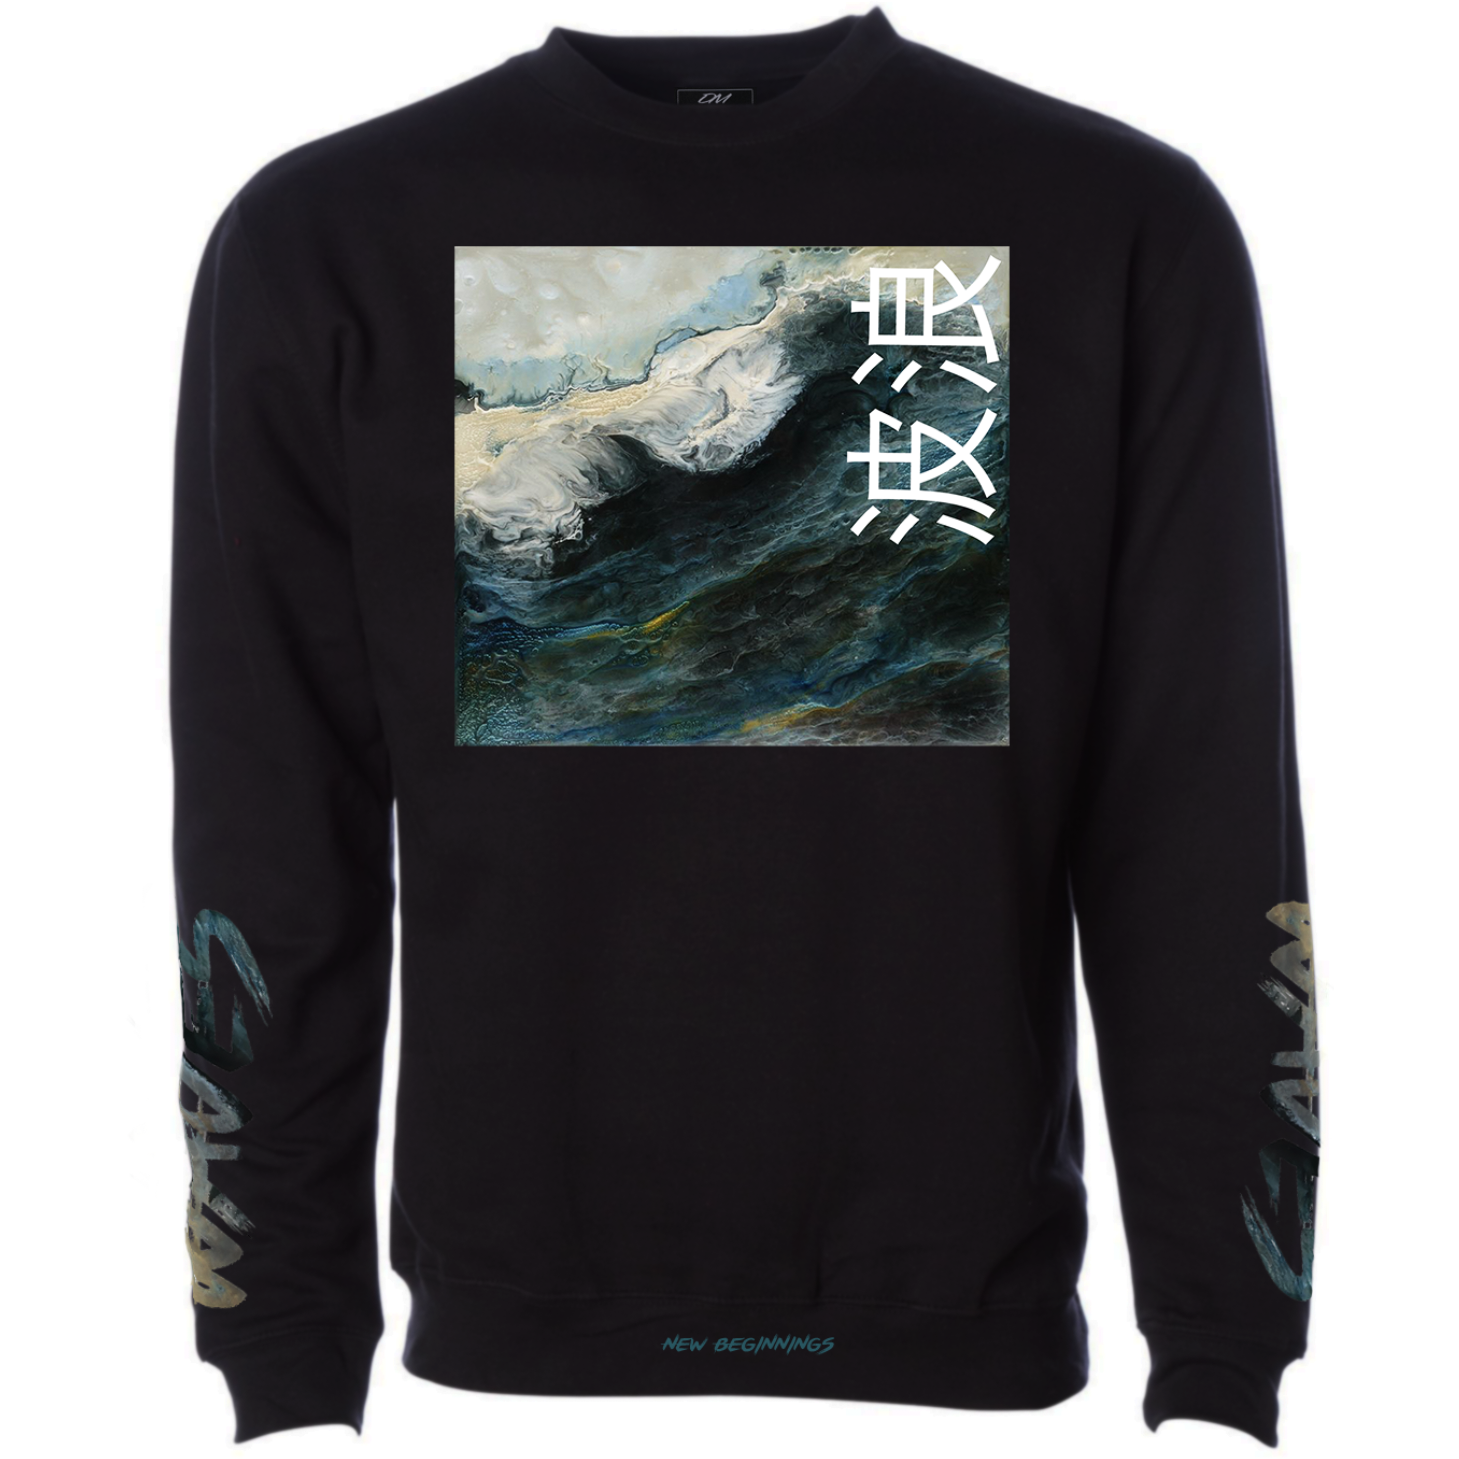 "Waves" Sweatshirt